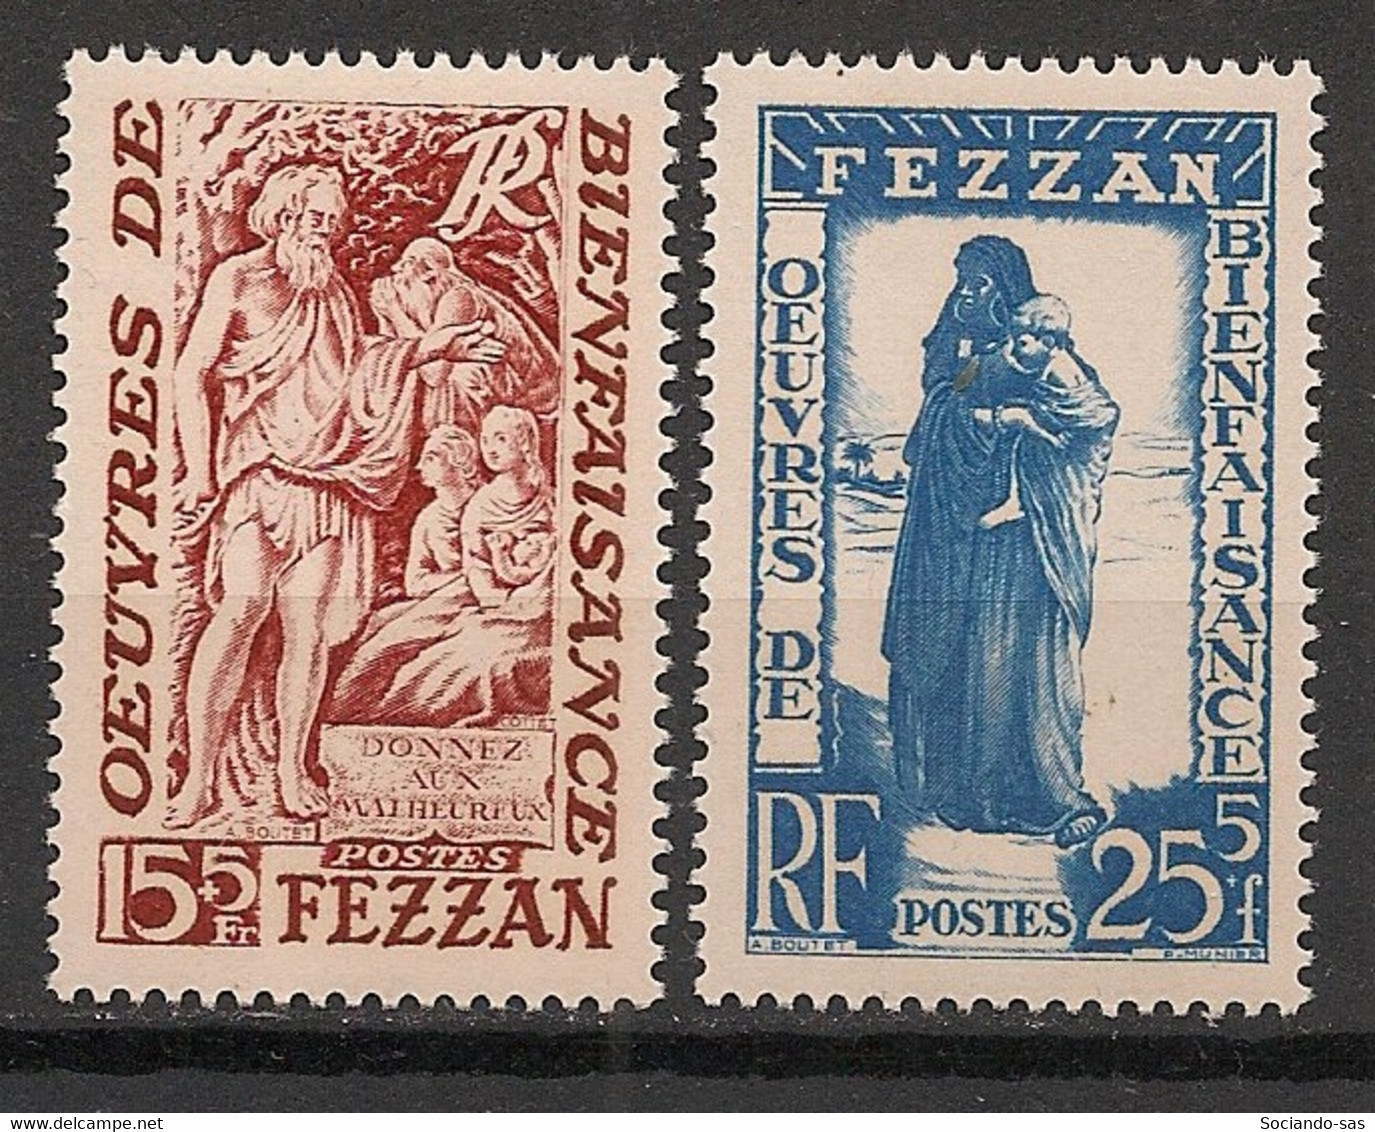 FEZZAN - 1950 - N°Yv. 54 à 55 - Série Complète - Neuf Luxe ** / MNH / Postfrisch - Nuevos